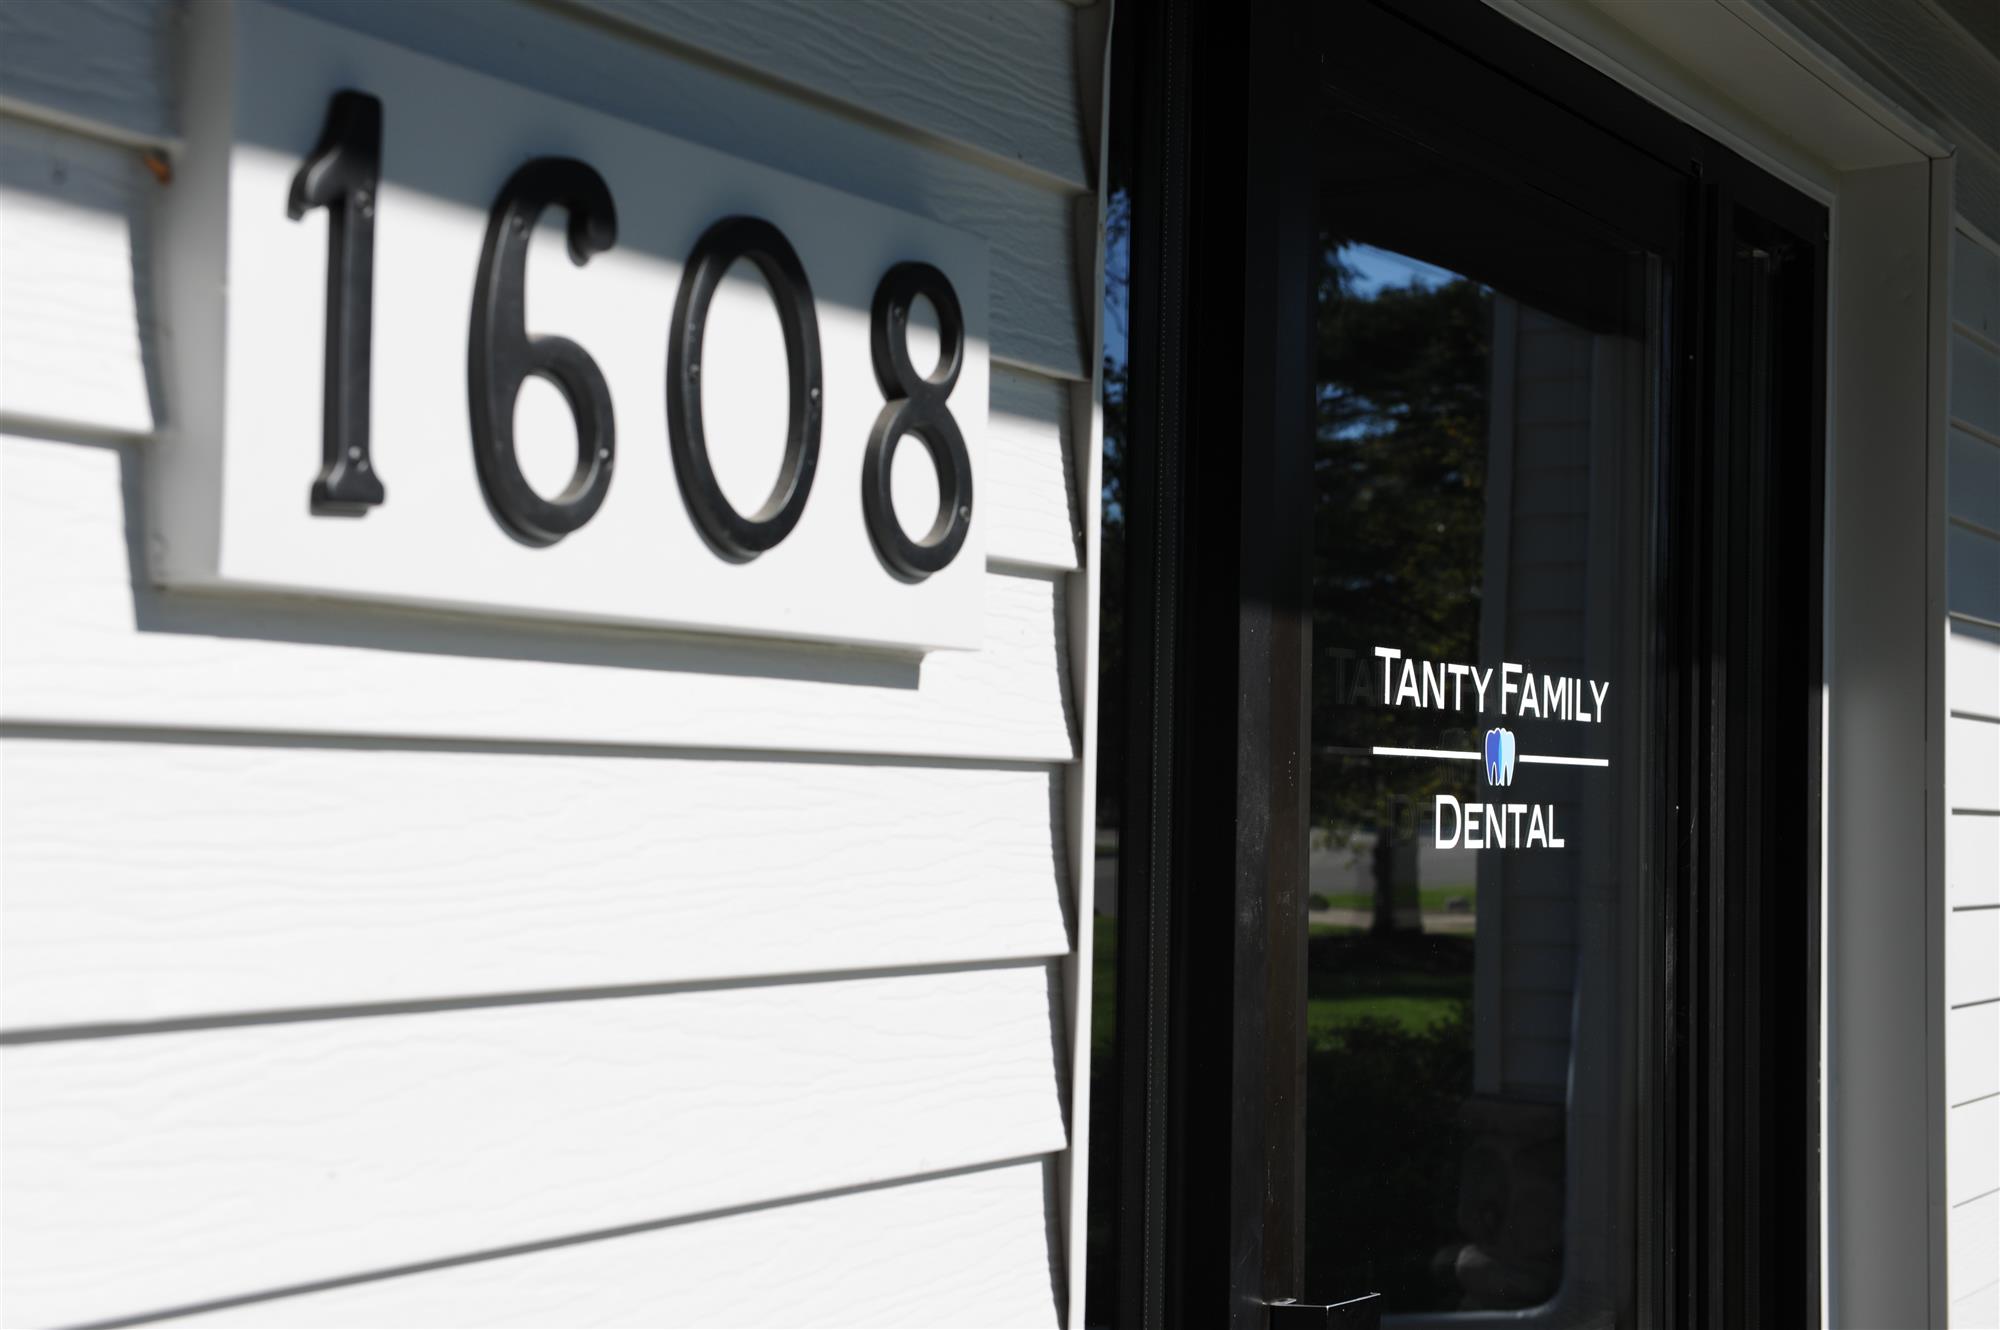 Tanty Family Dental Office in Waukesha, WI